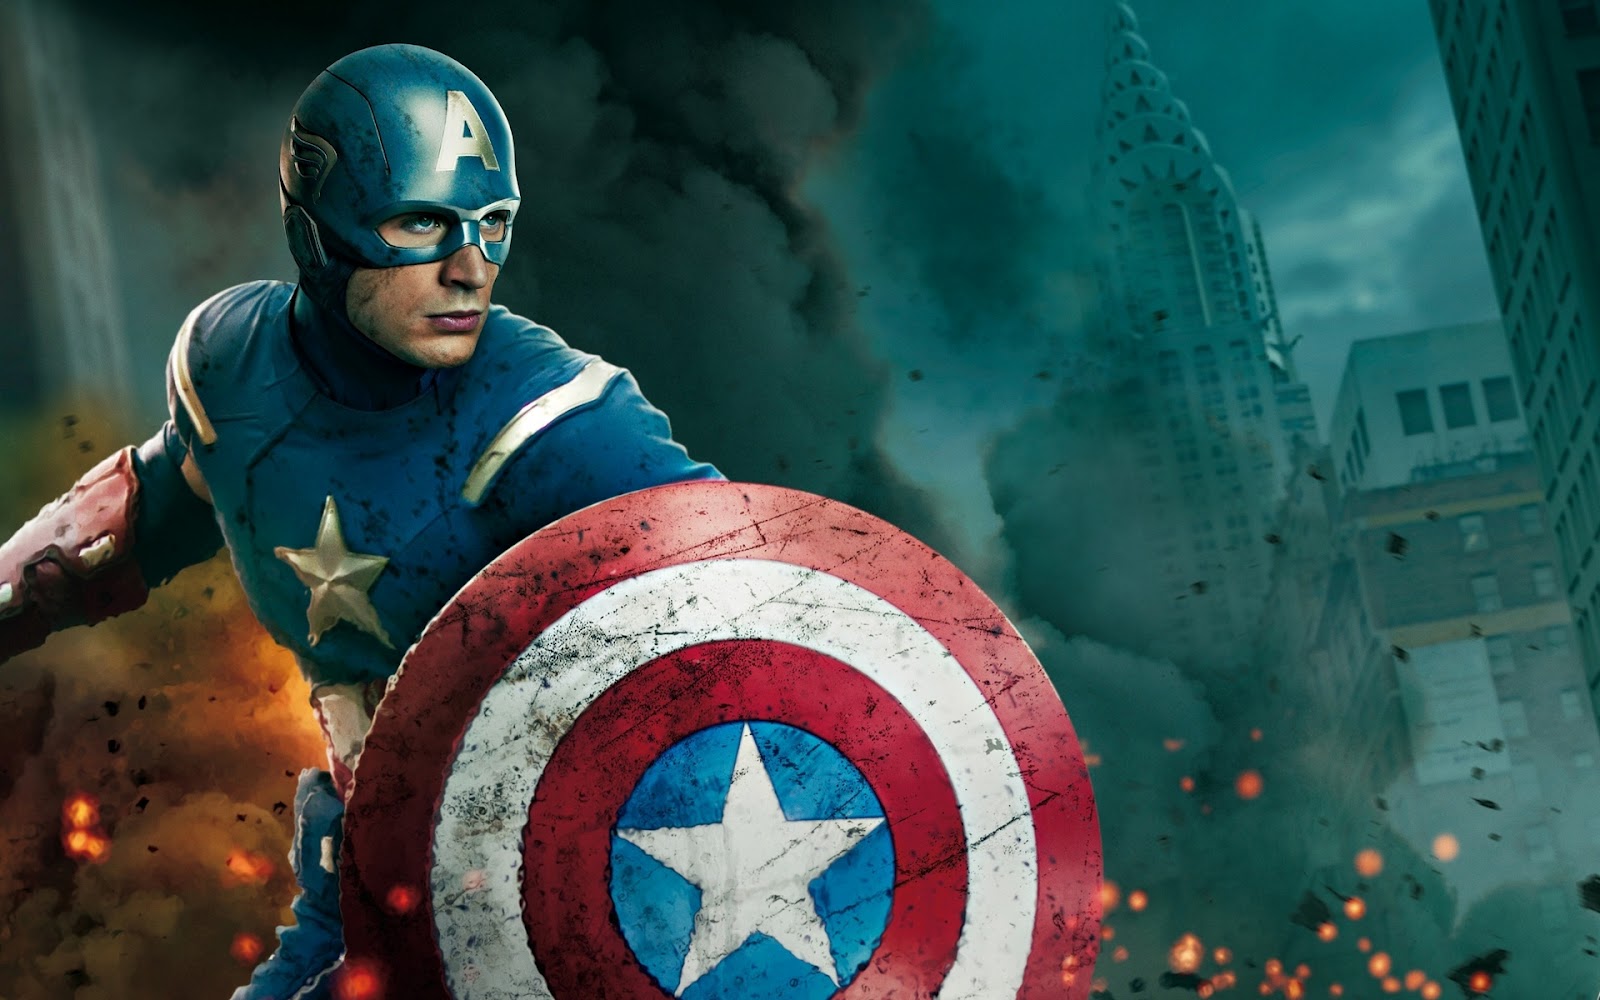 http://2.bp.blogspot.com/-pFxzr7u85eY/T7PGXSRJ9OI/AAAAAAAAdGE/9XqcURpxF_M/s1600/The-Avengers_Captain-America.jpg